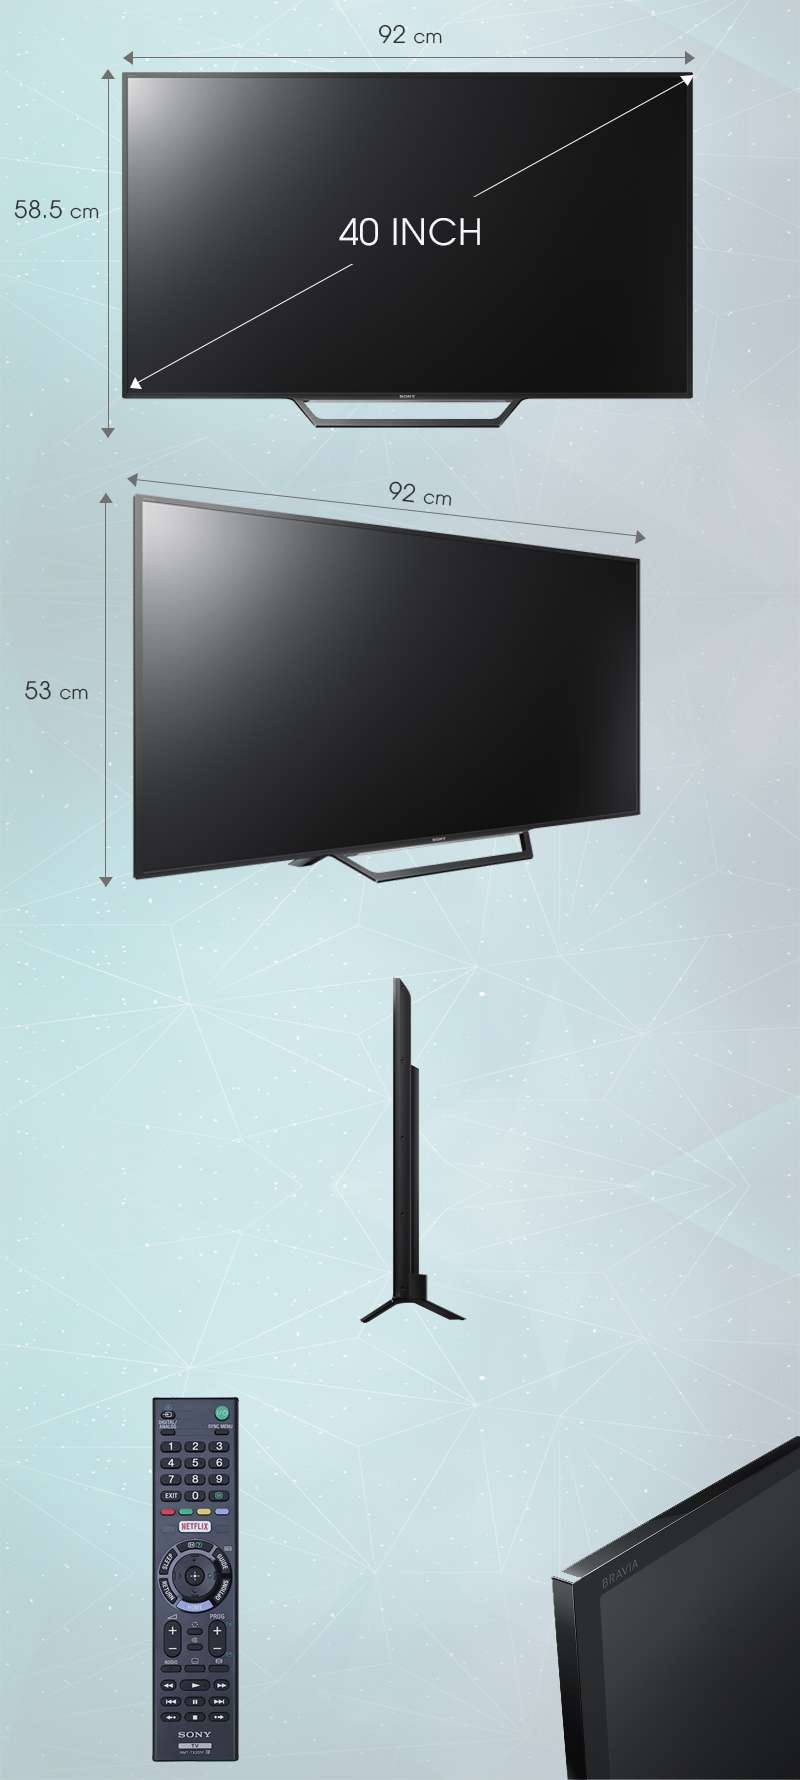 Smart Tivi Sony 40 inch KDL-40W650D - Kích thước tivi